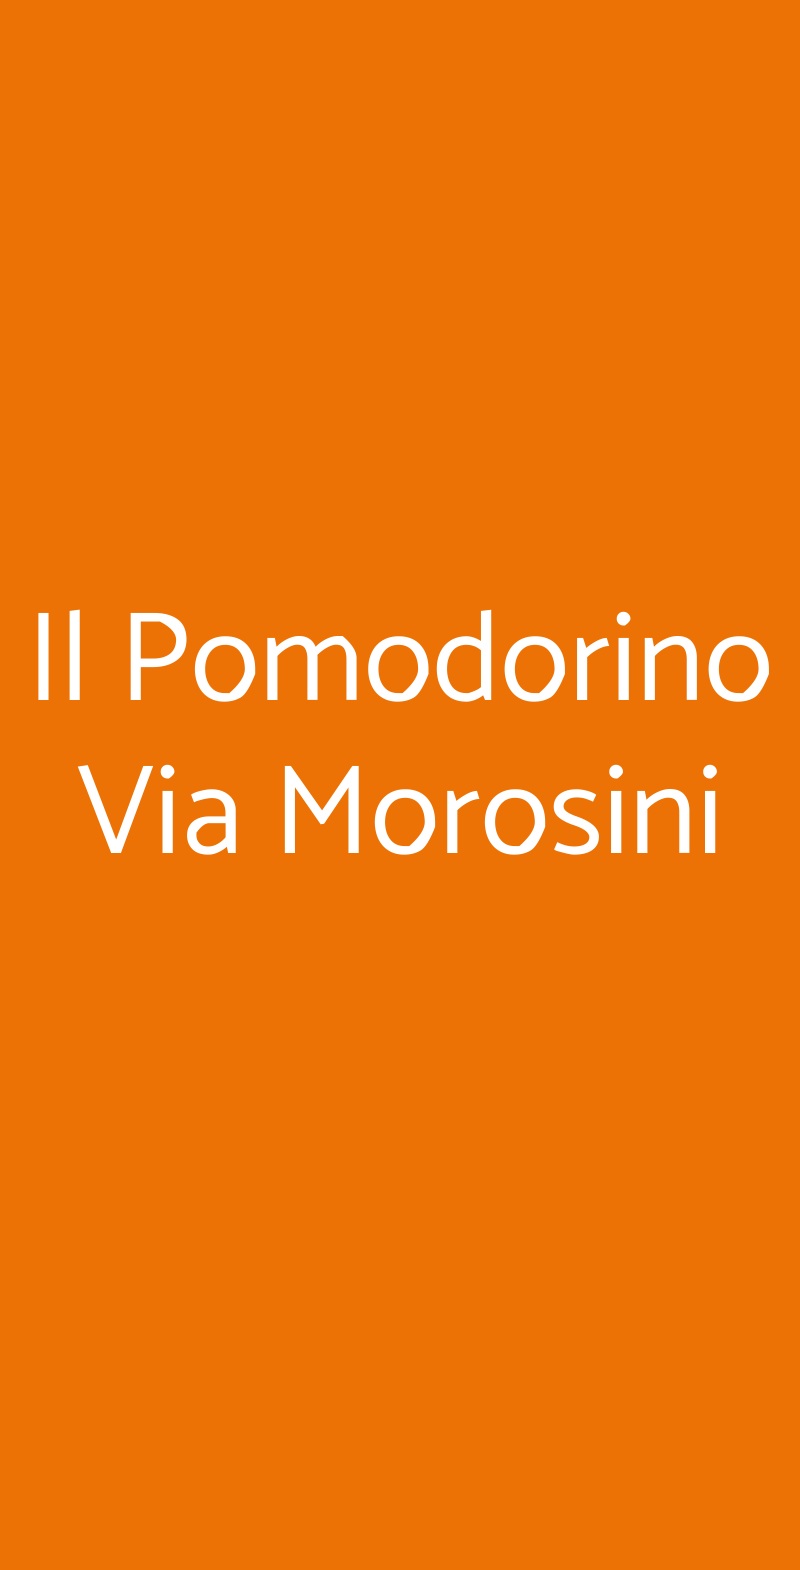 Il Pomodorino Via Morosini Milano menù 1 pagina